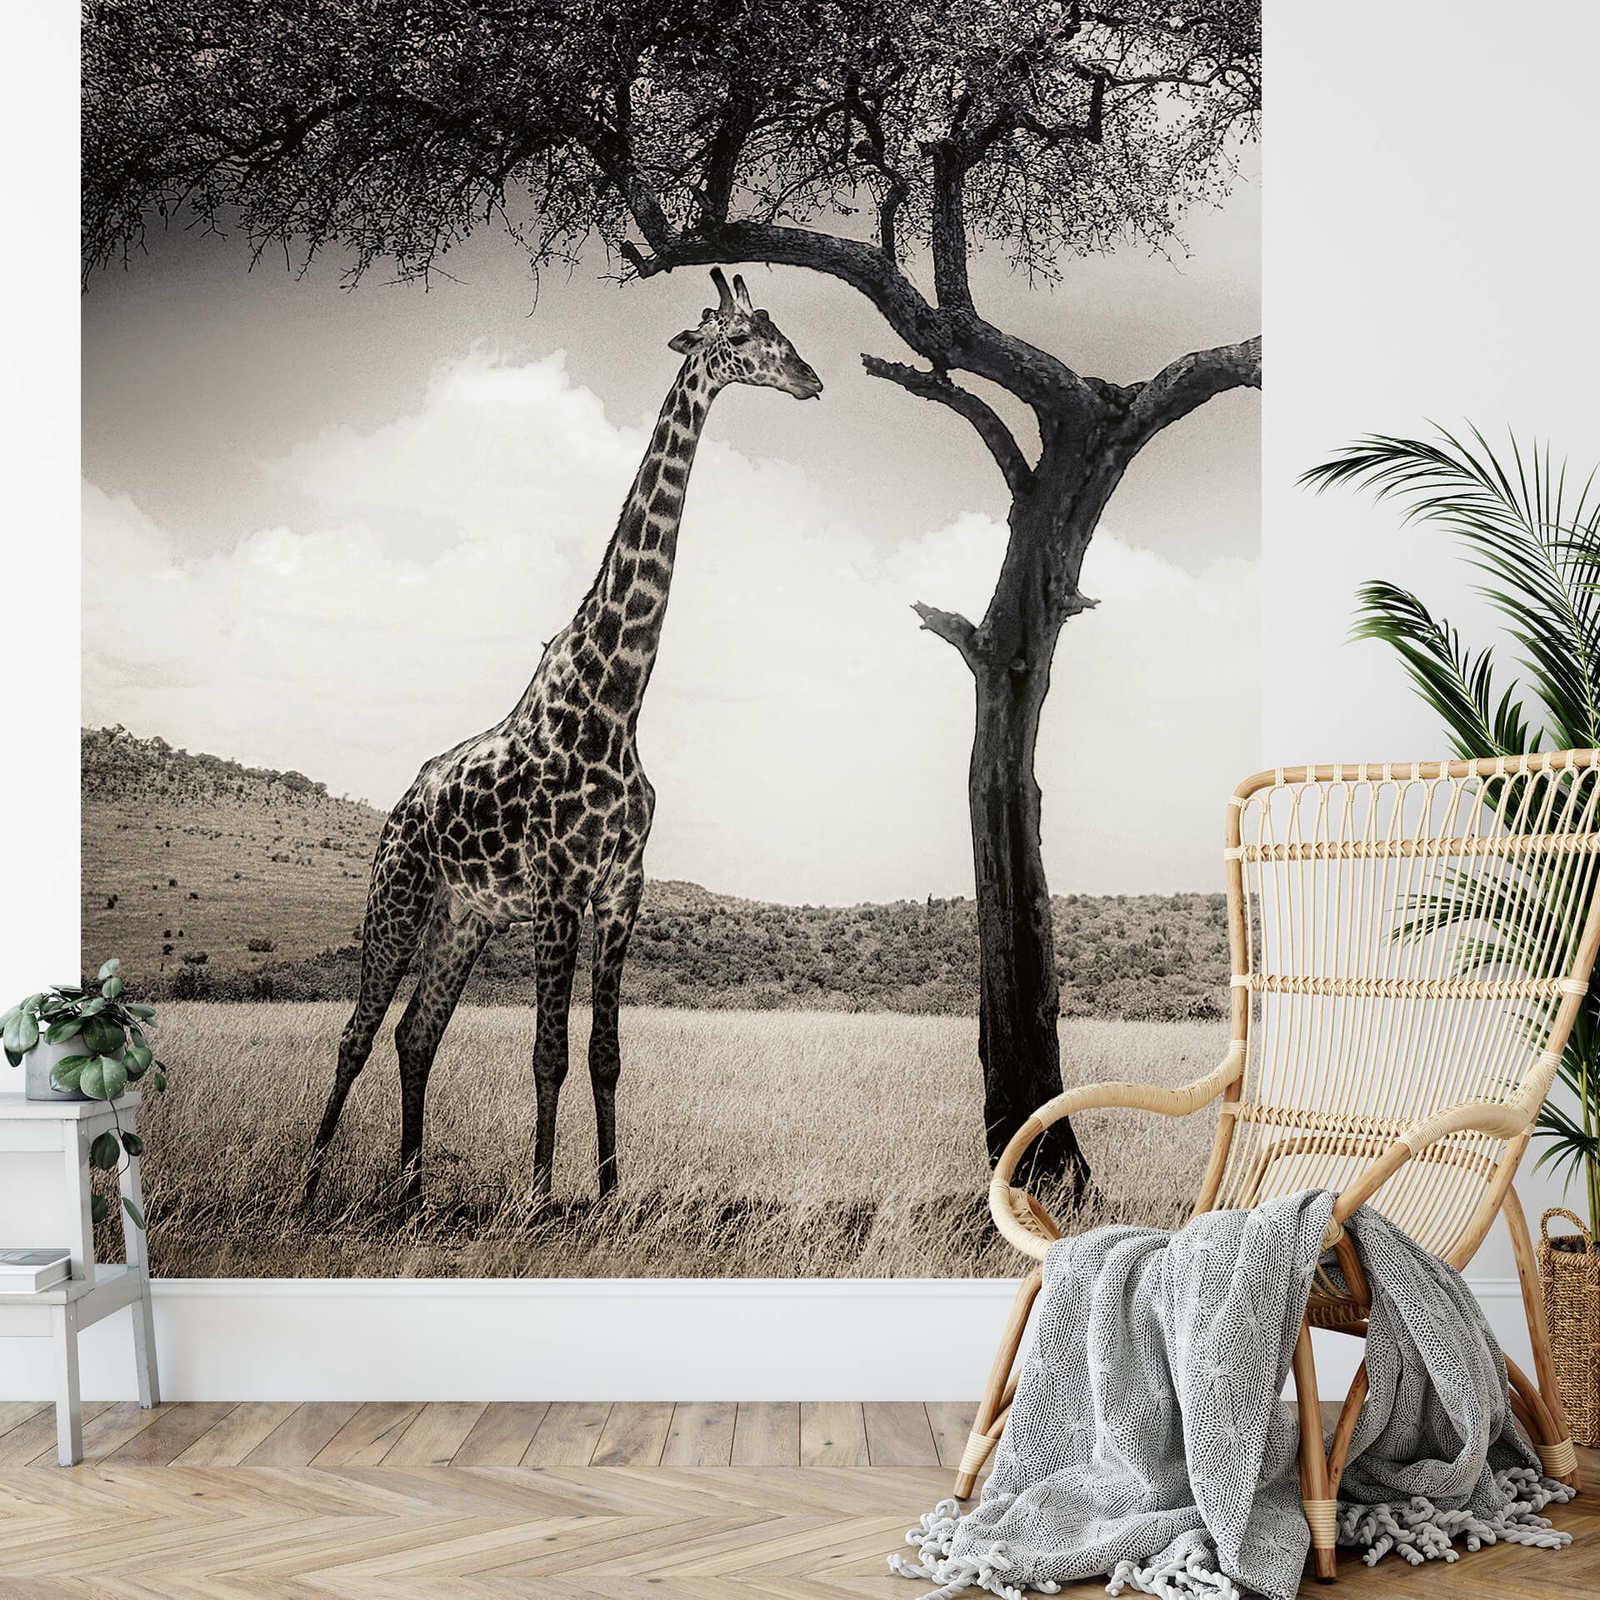             Fototapete Giraffe in Savanne – Grau, Weiß, Schwarz
        